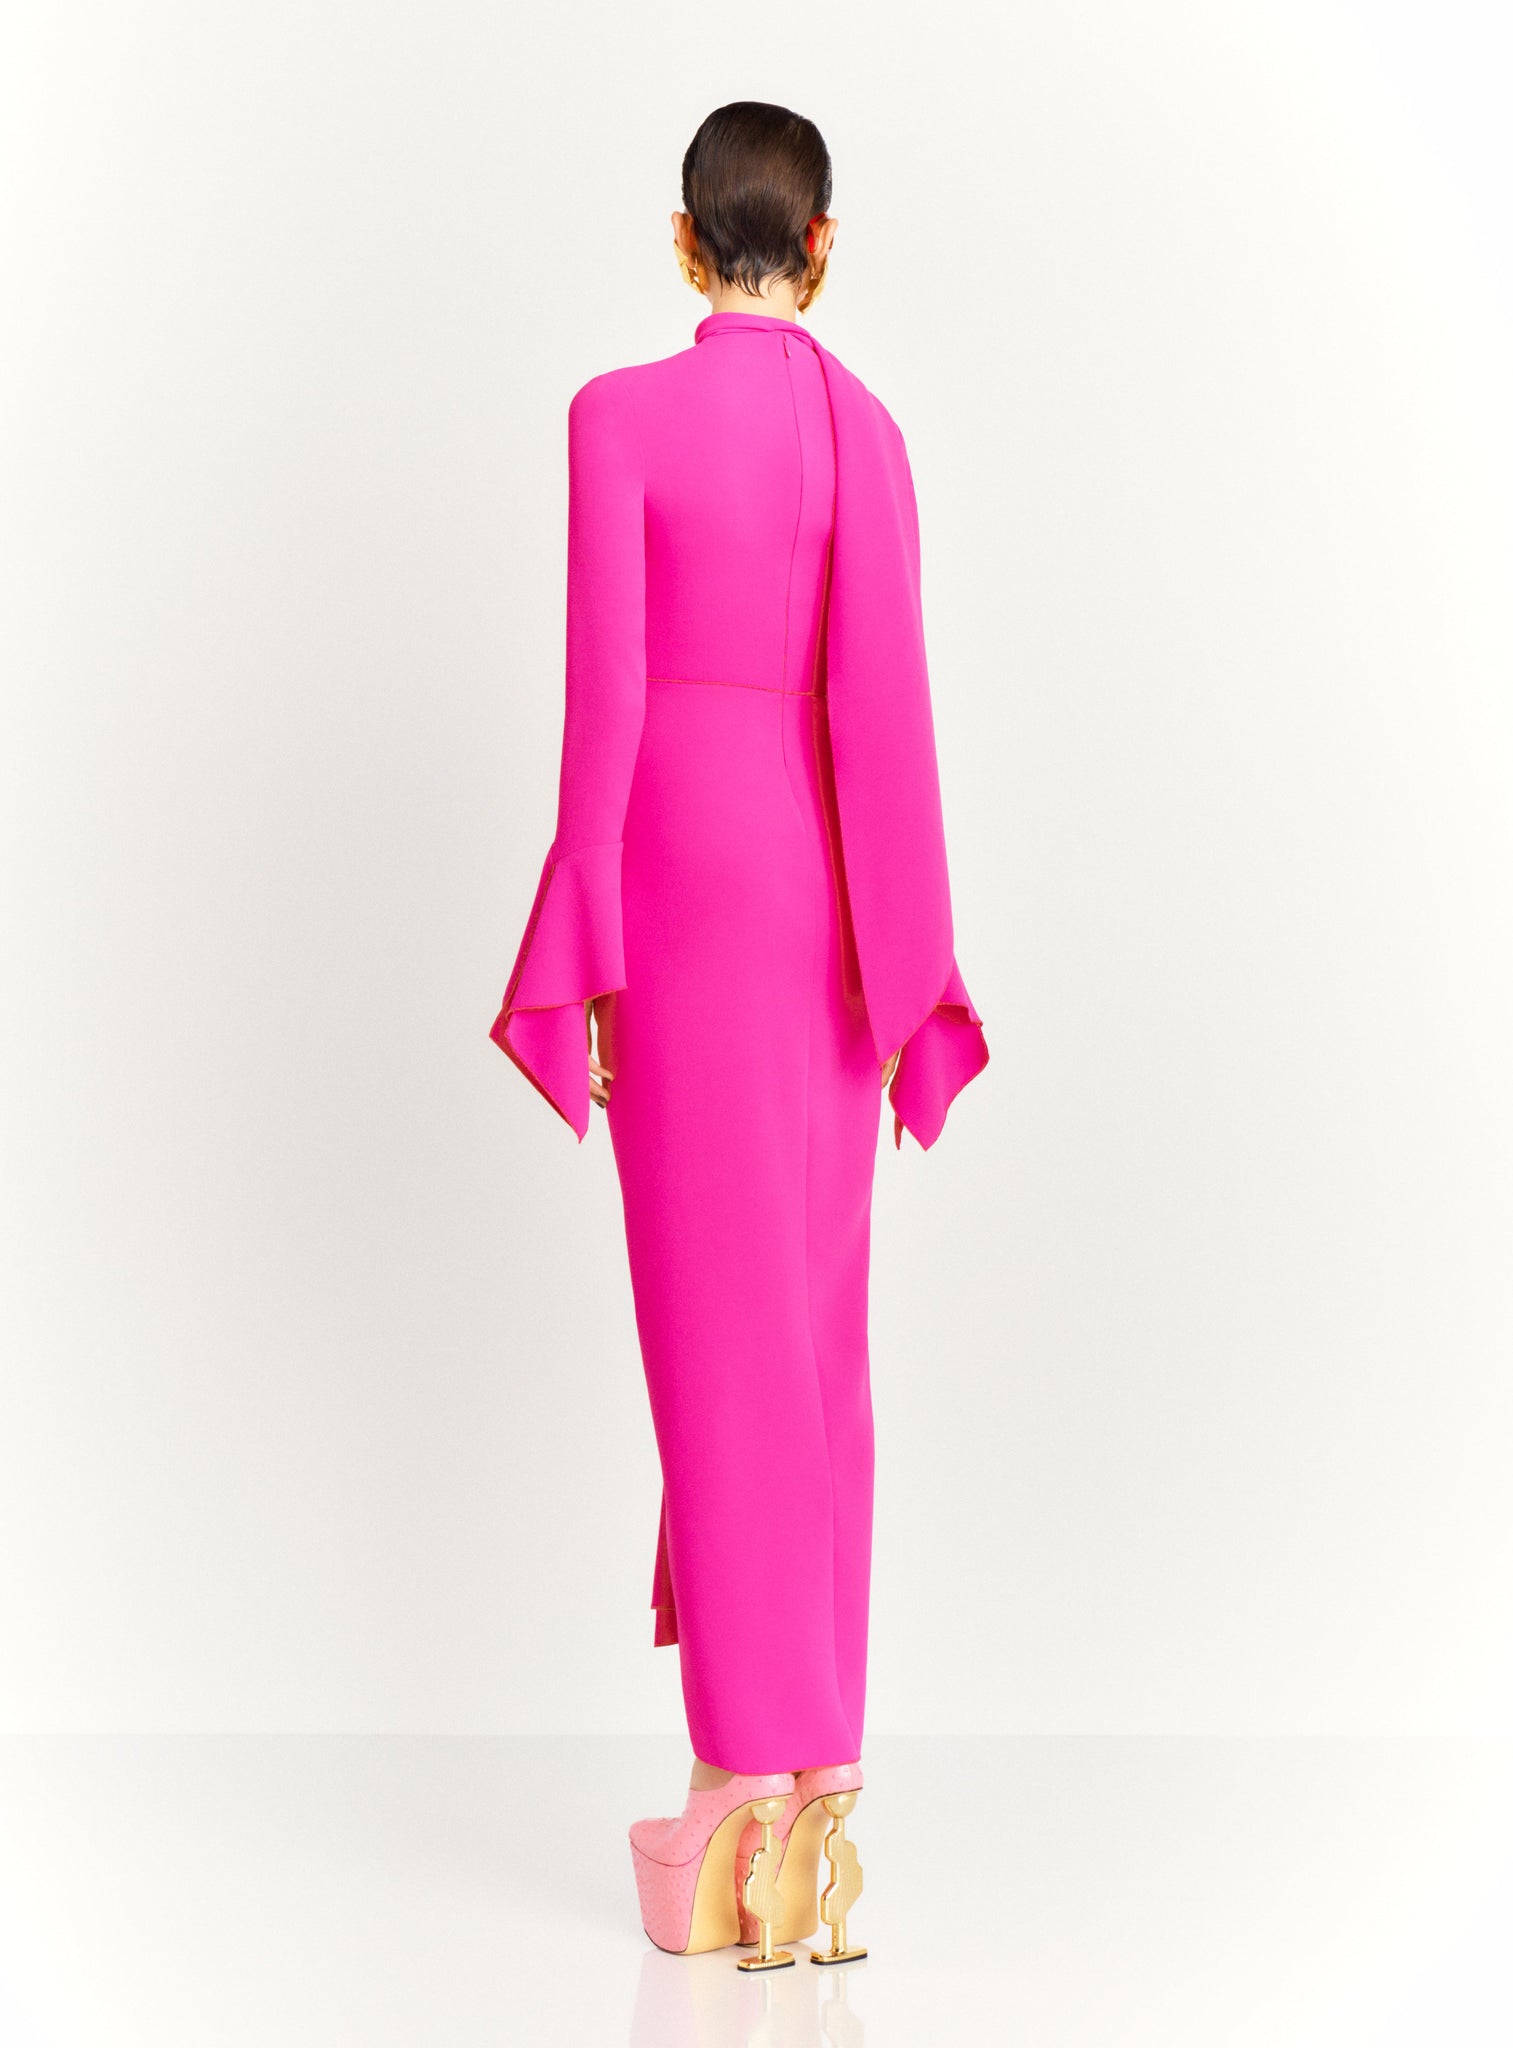 The Nella Maxi Dress in Pink